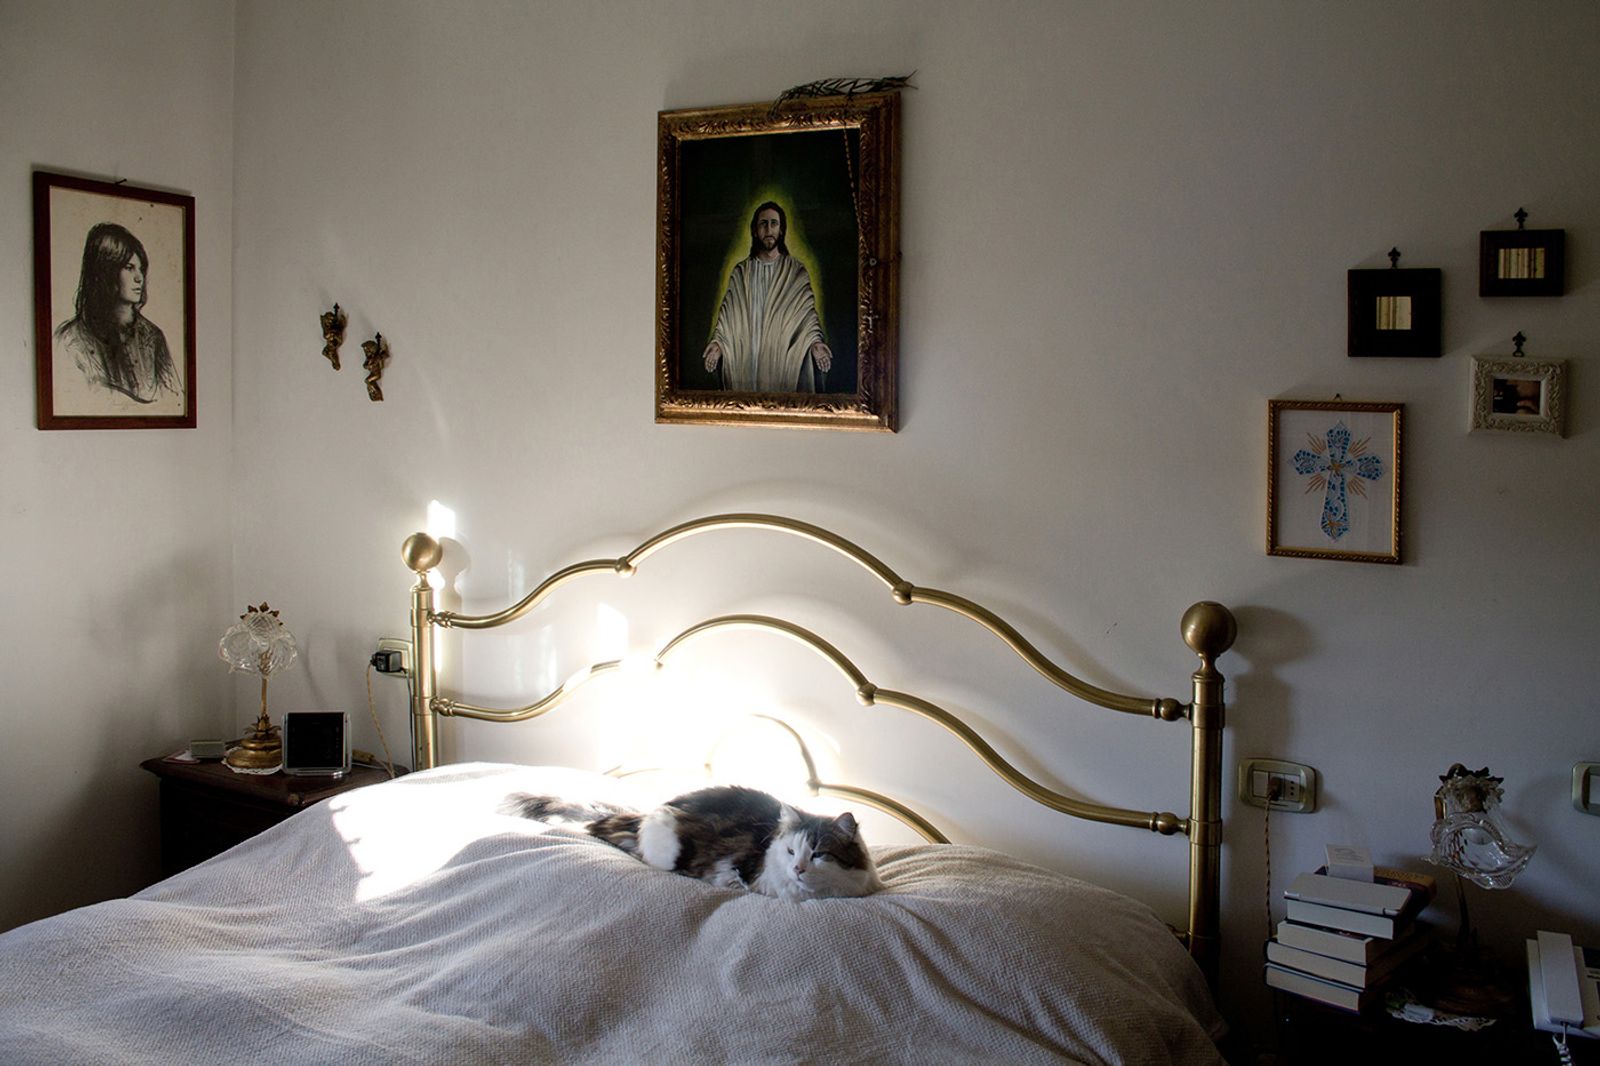 © Leonardo Chiarabini - Vanessa's parents room. Florence, Italy.